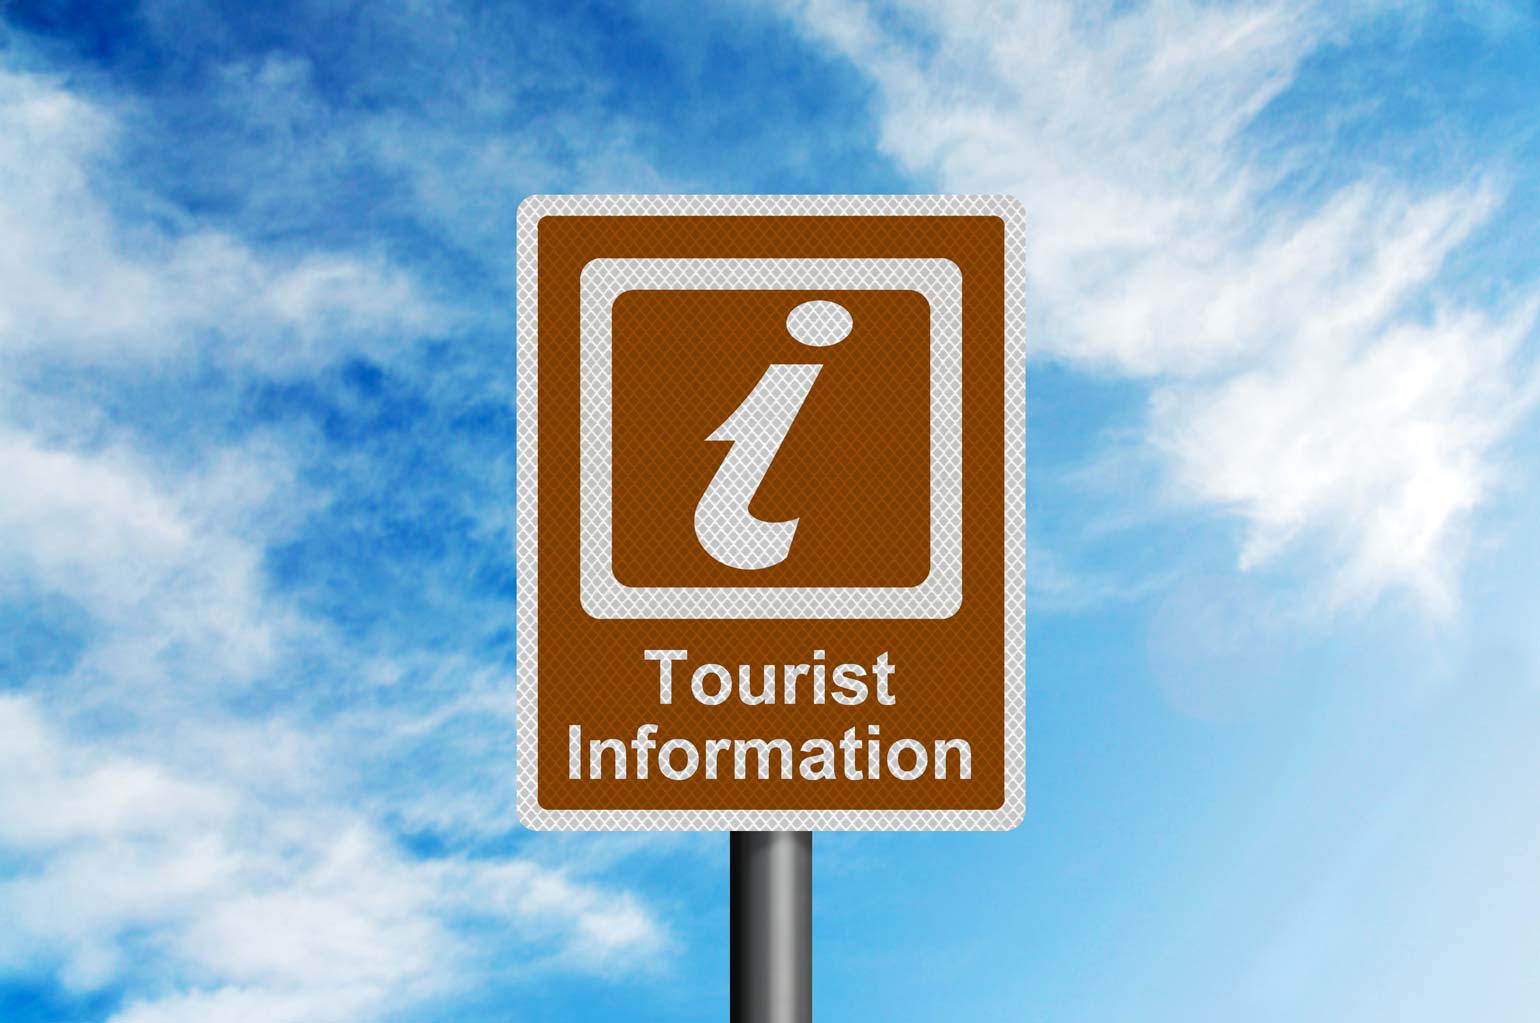 Isle of Man - Visitor information